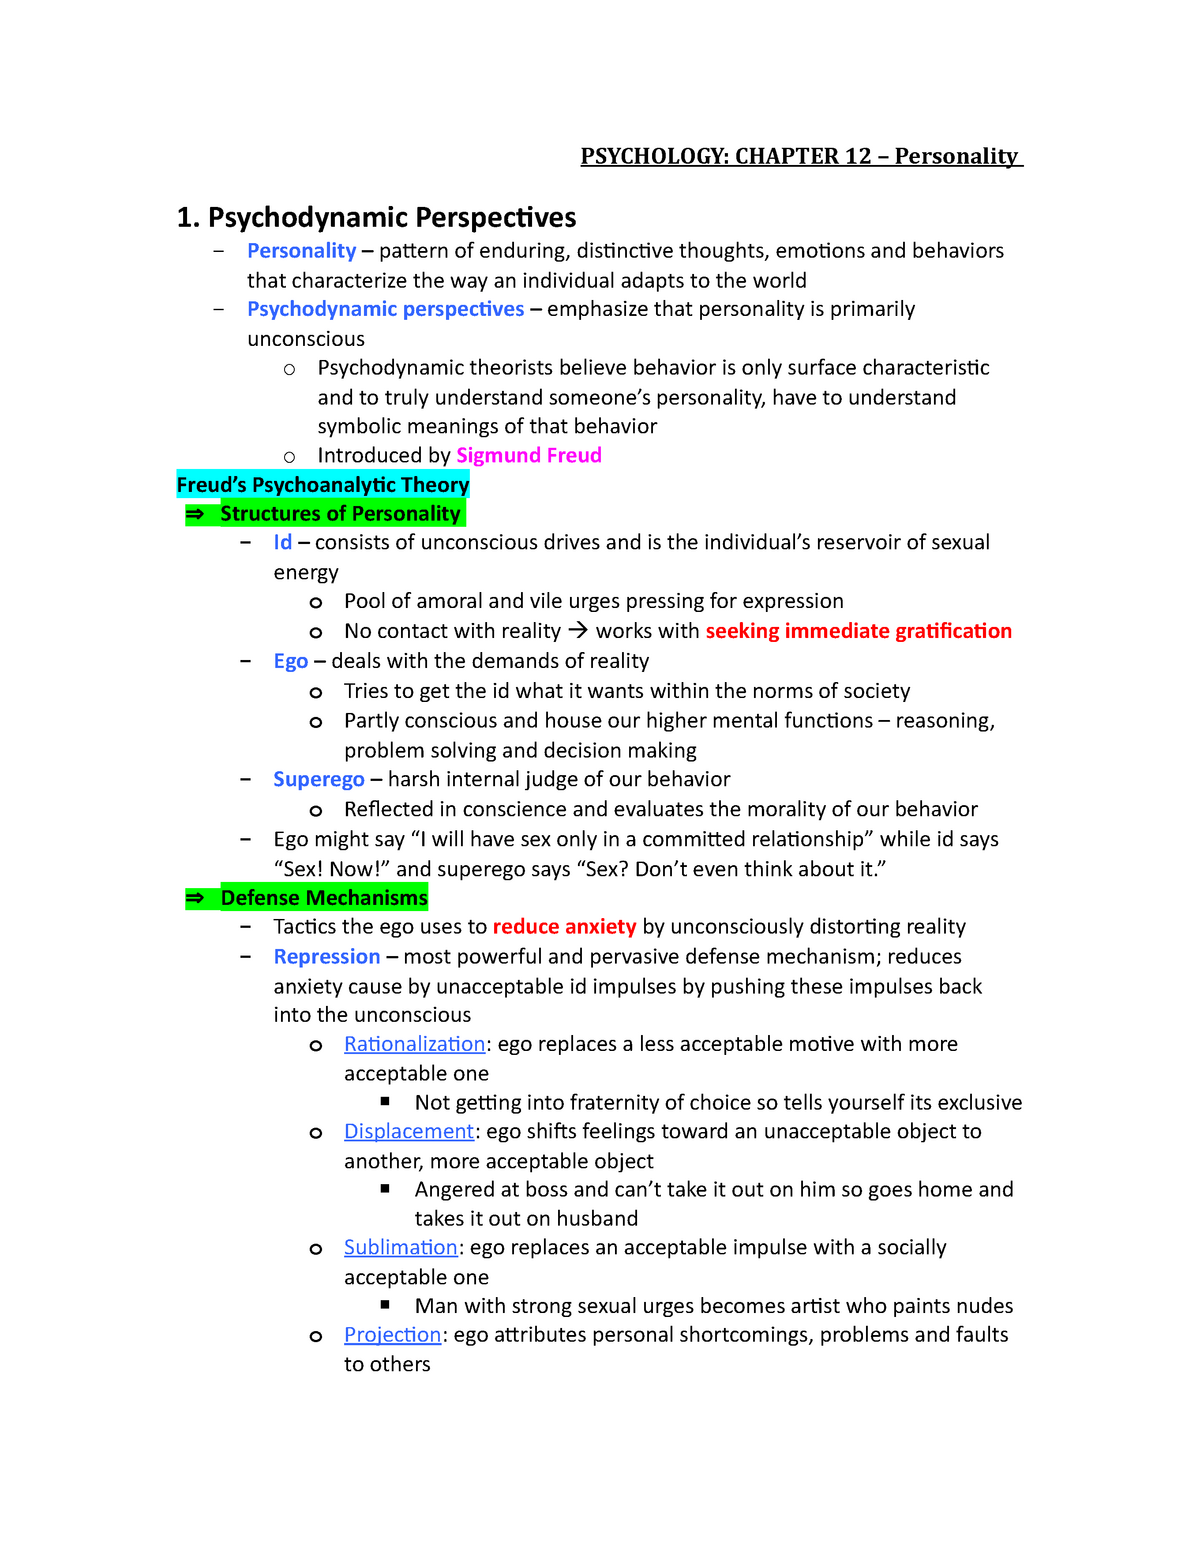 Chapter 12 Notes Personality Psychology Chapter 12 Personality 1 Psychodynamic